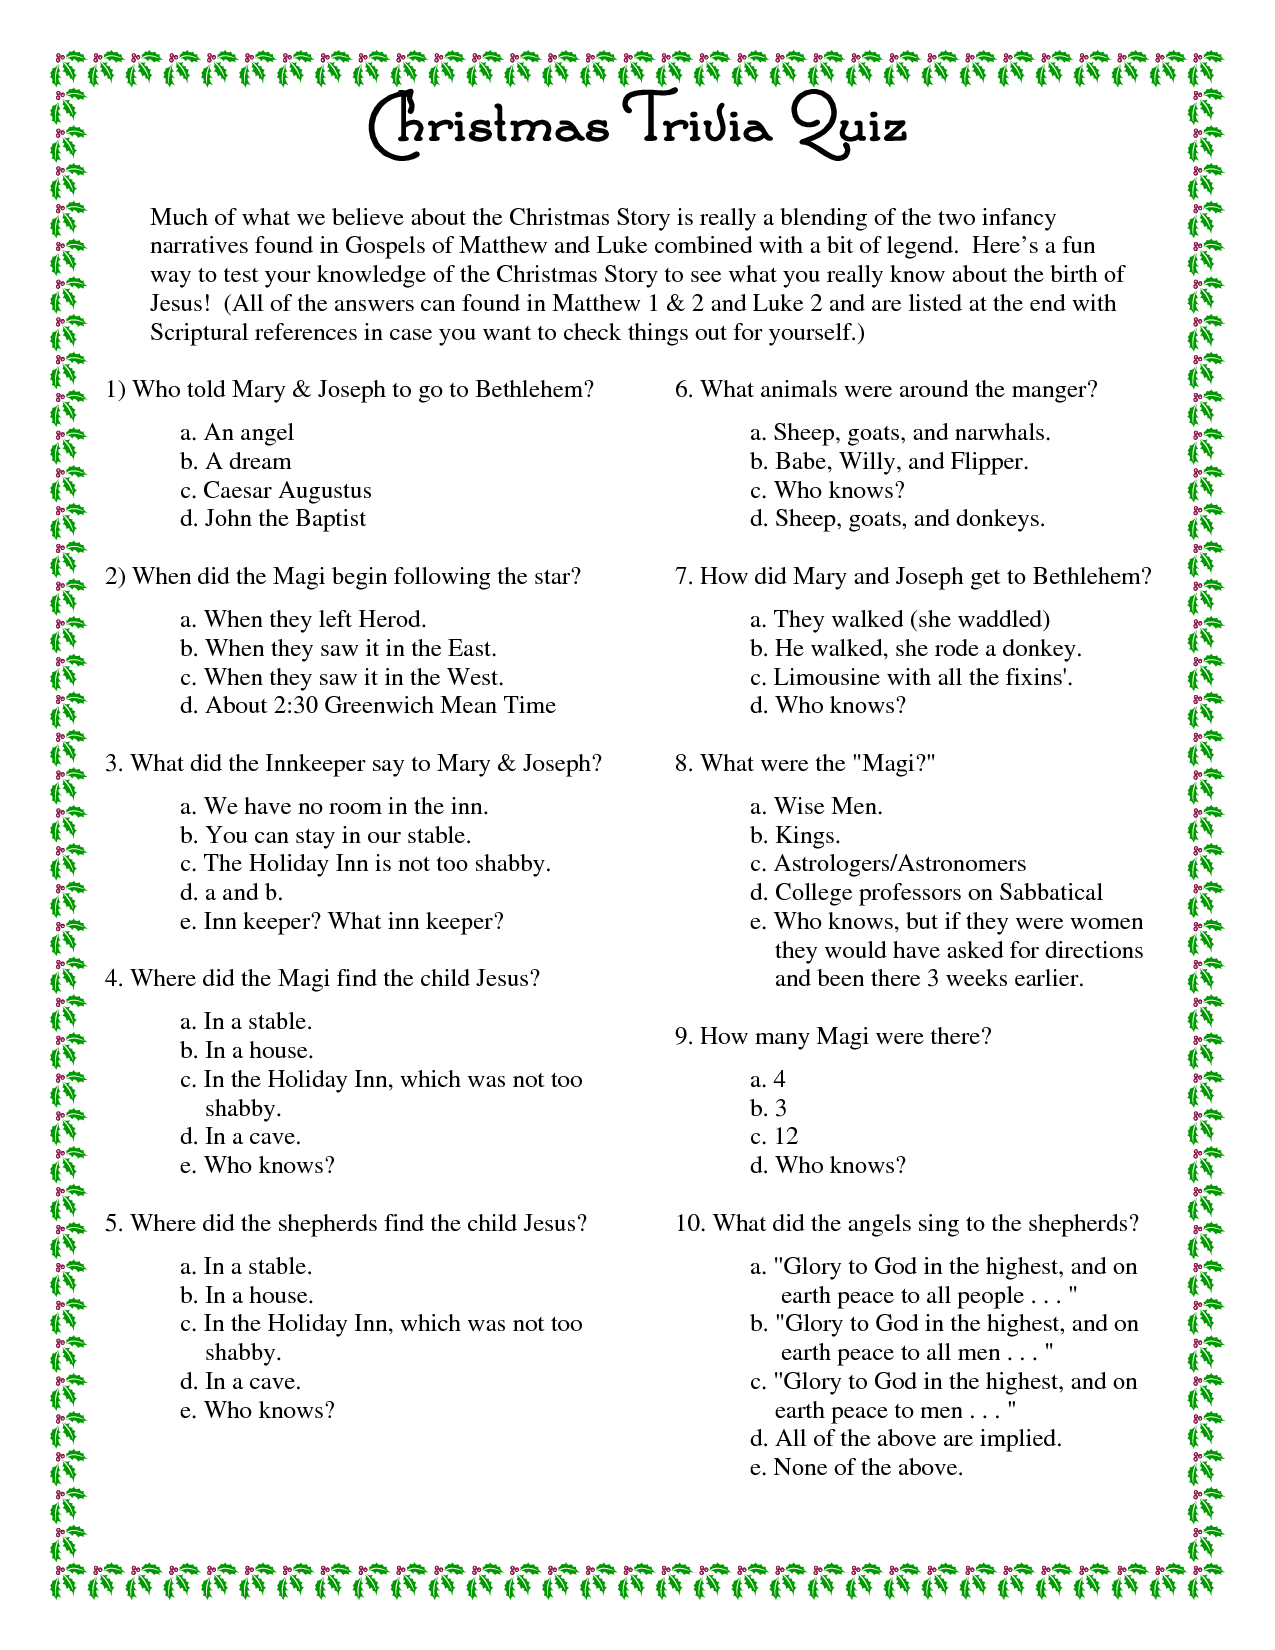 Printable+Christmas+Trivia+Questions+And+Answers | Christmas - Free Christmas Picture Quiz Questions And Answers Printable